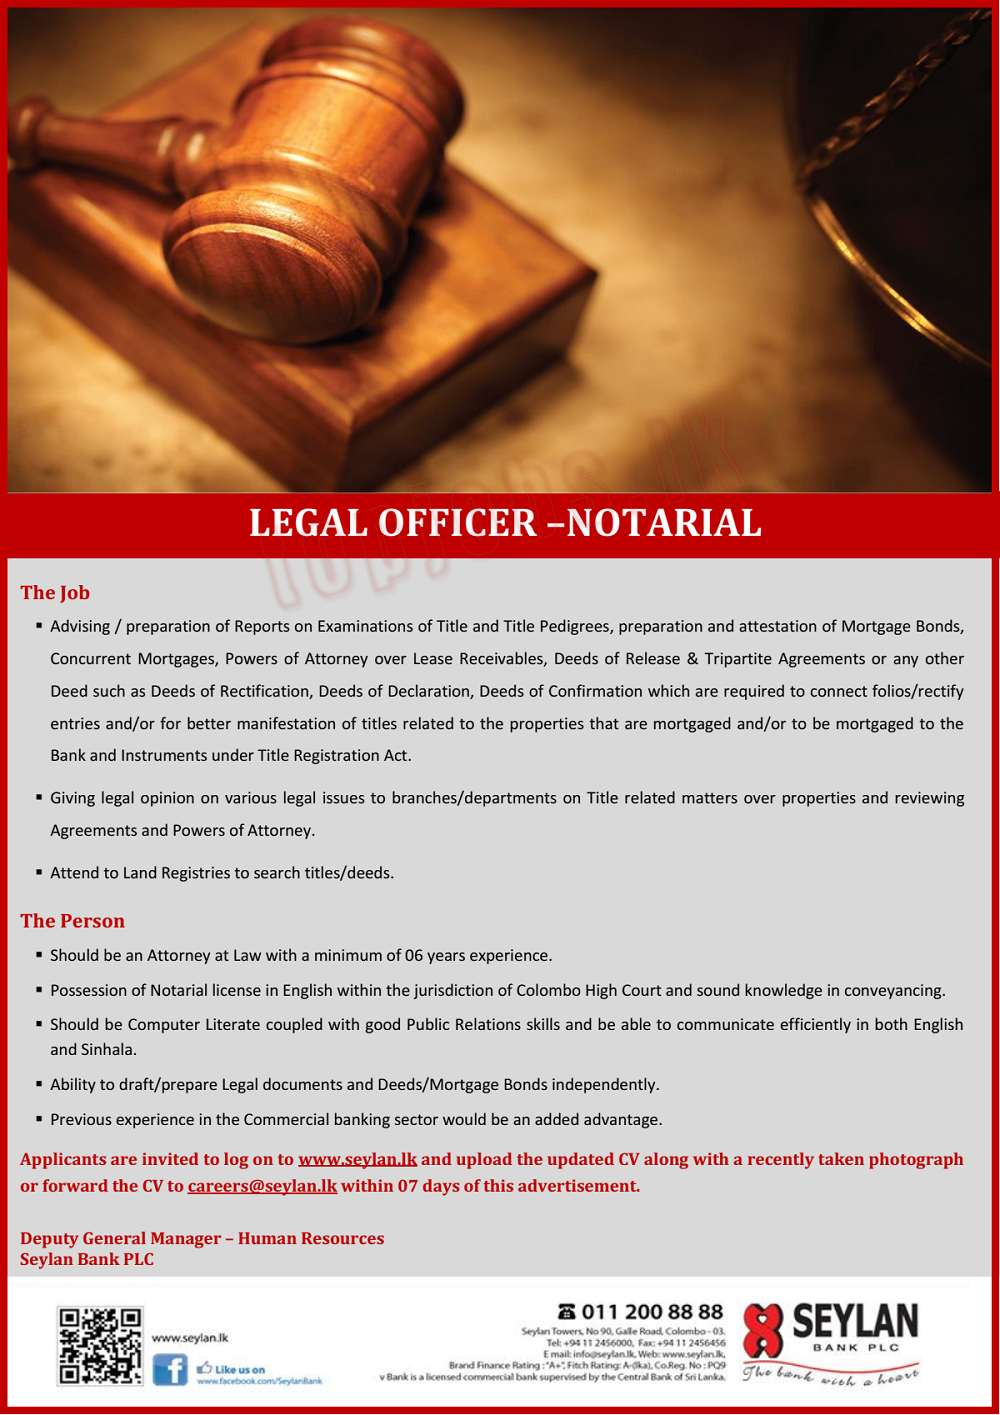 Legal Officer of Notarial Vacancies in Seylan Bank PLC